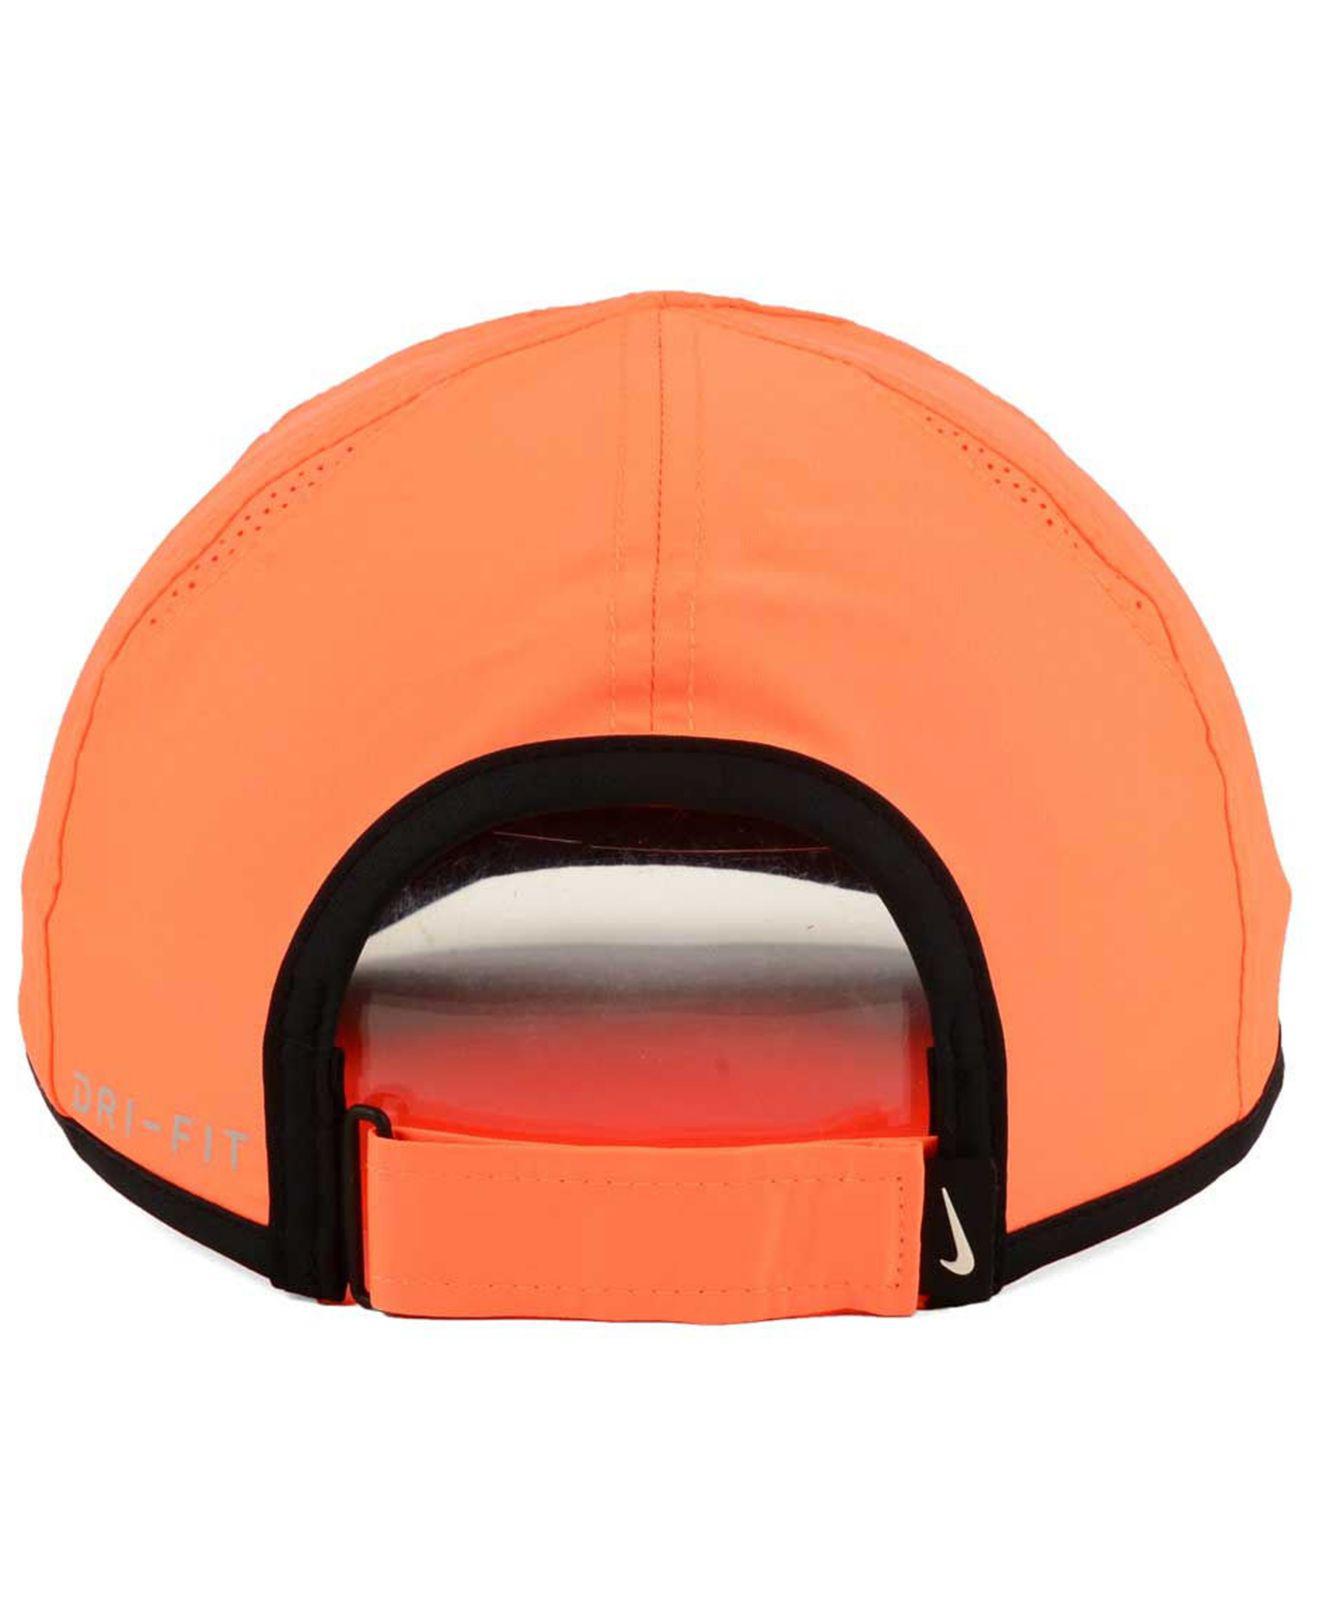 Nike Featherlight Cap in Orange | Lyst